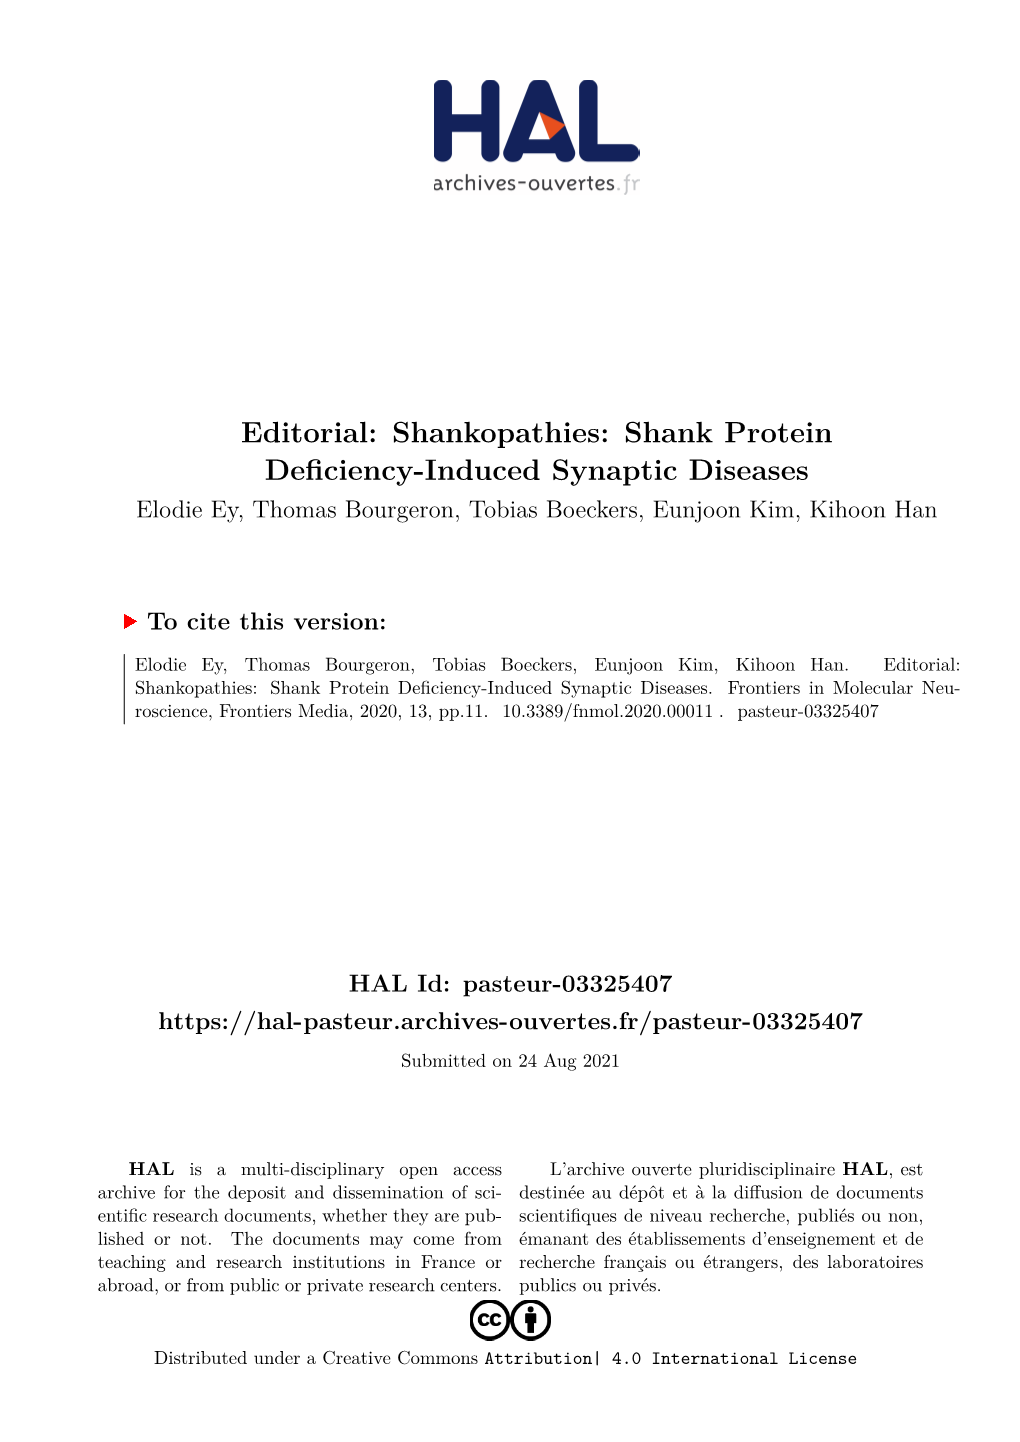 Shankopathies: Shank Protein Deficiency-Induced Synaptic Diseases Elodie Ey, Thomas Bourgeron, Tobias Boeckers, Eunjoon Kim, Kihoon Han